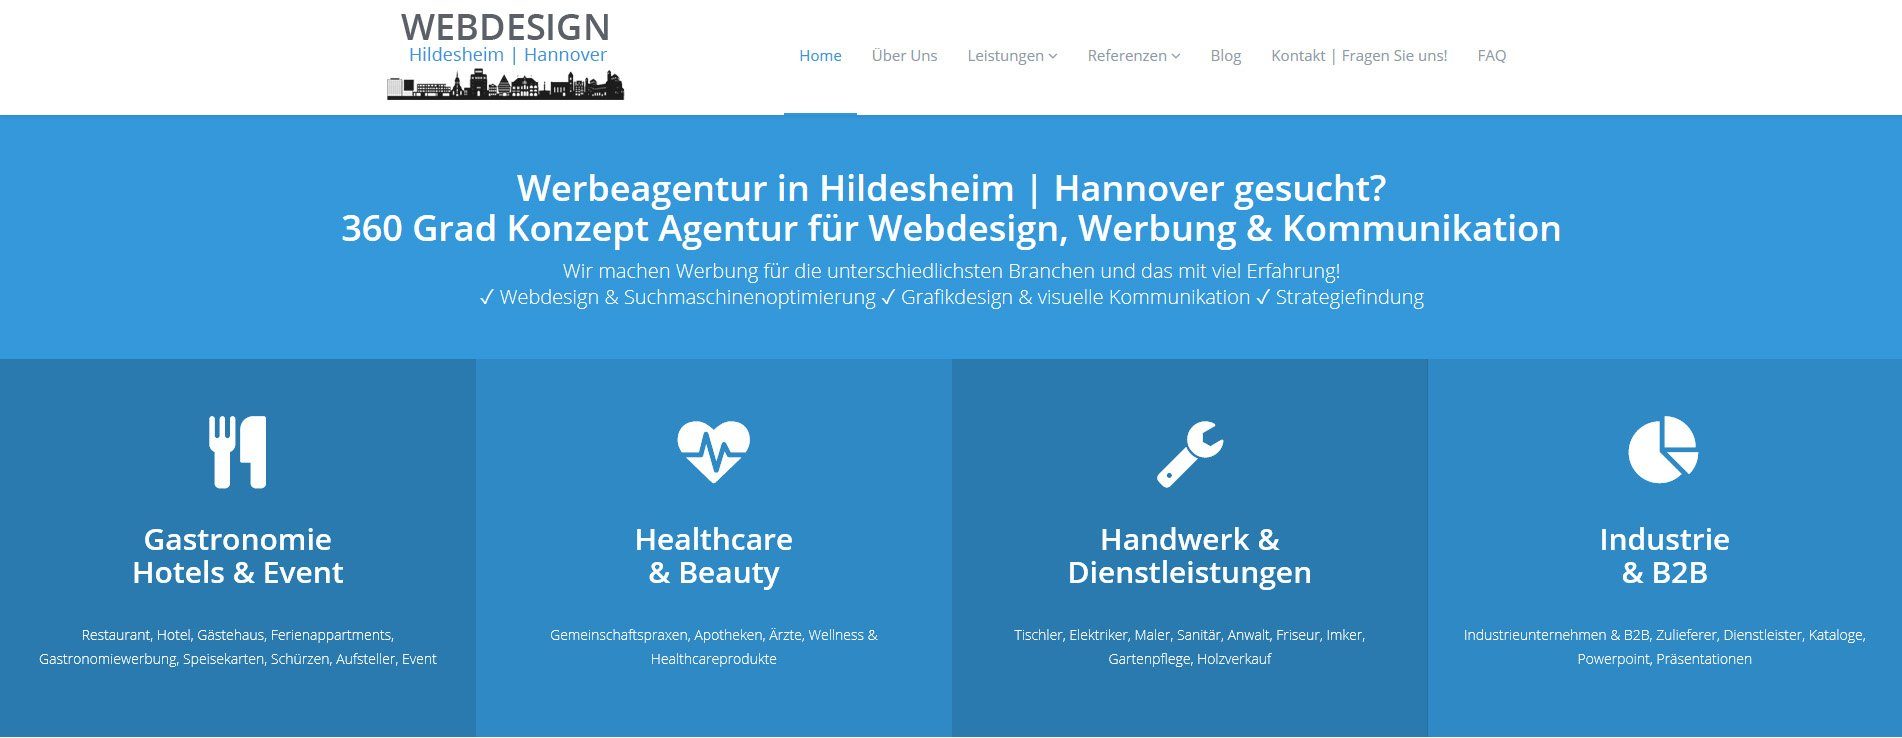 webdesign-hildesheim-facetitel